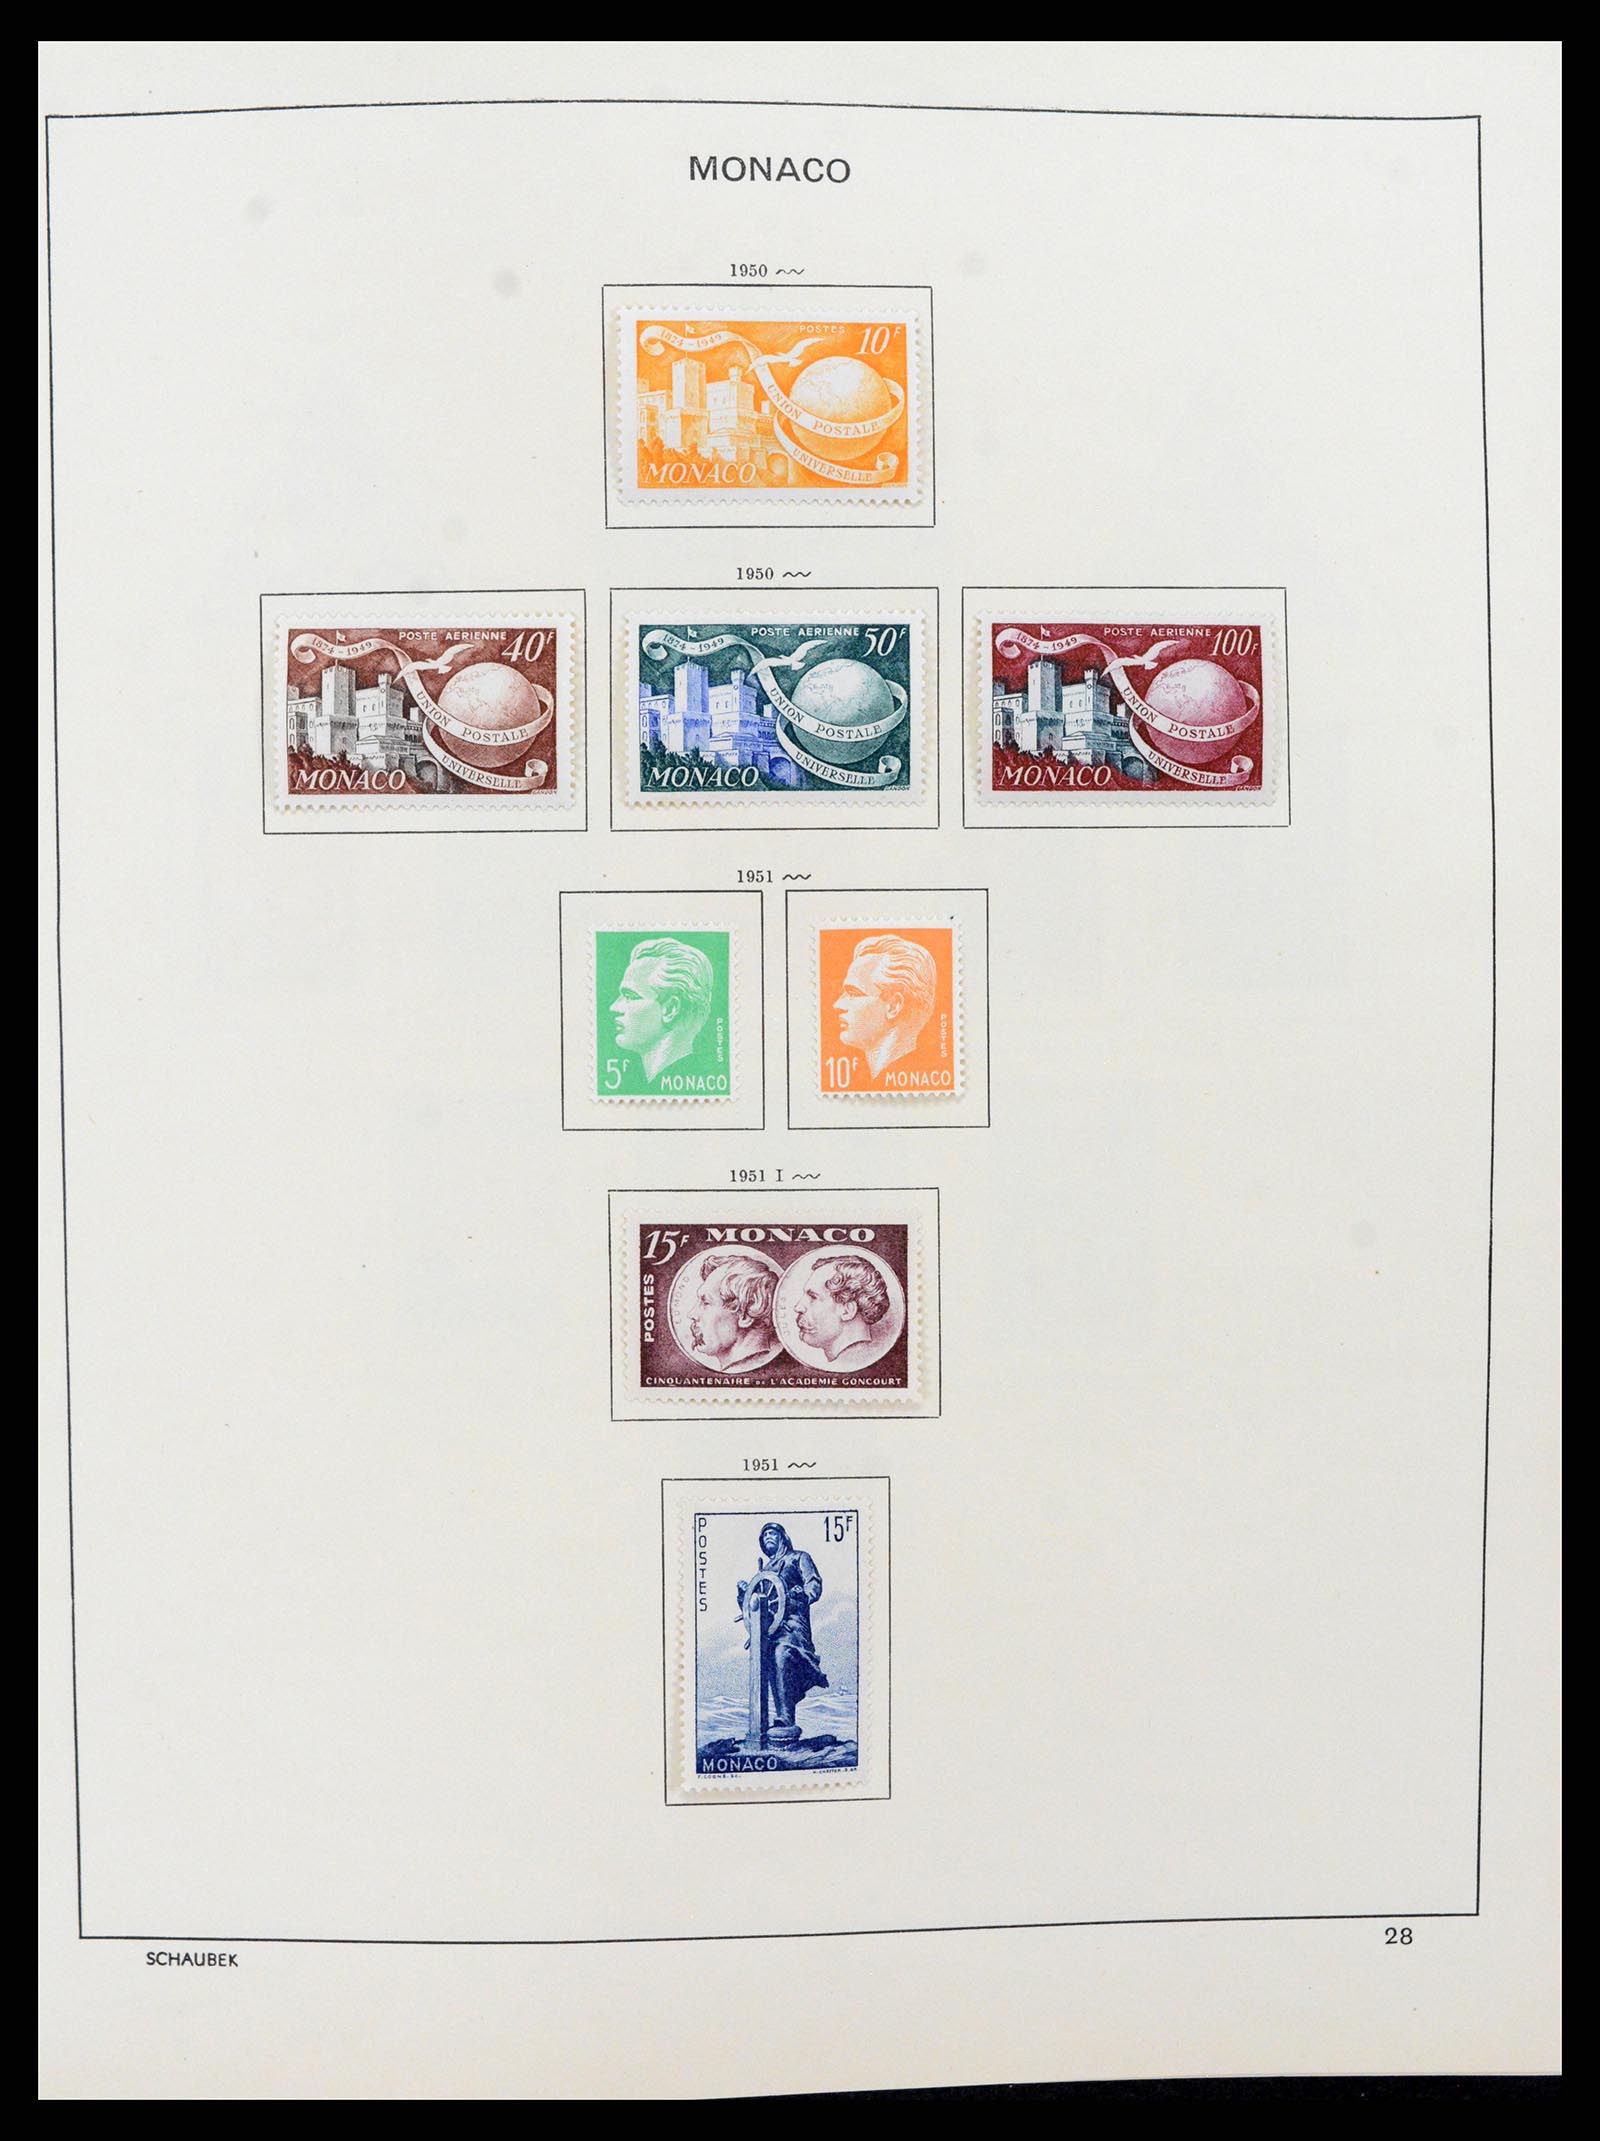 37570 031 - Stamp collection 37570 Monaco 1885-2013.